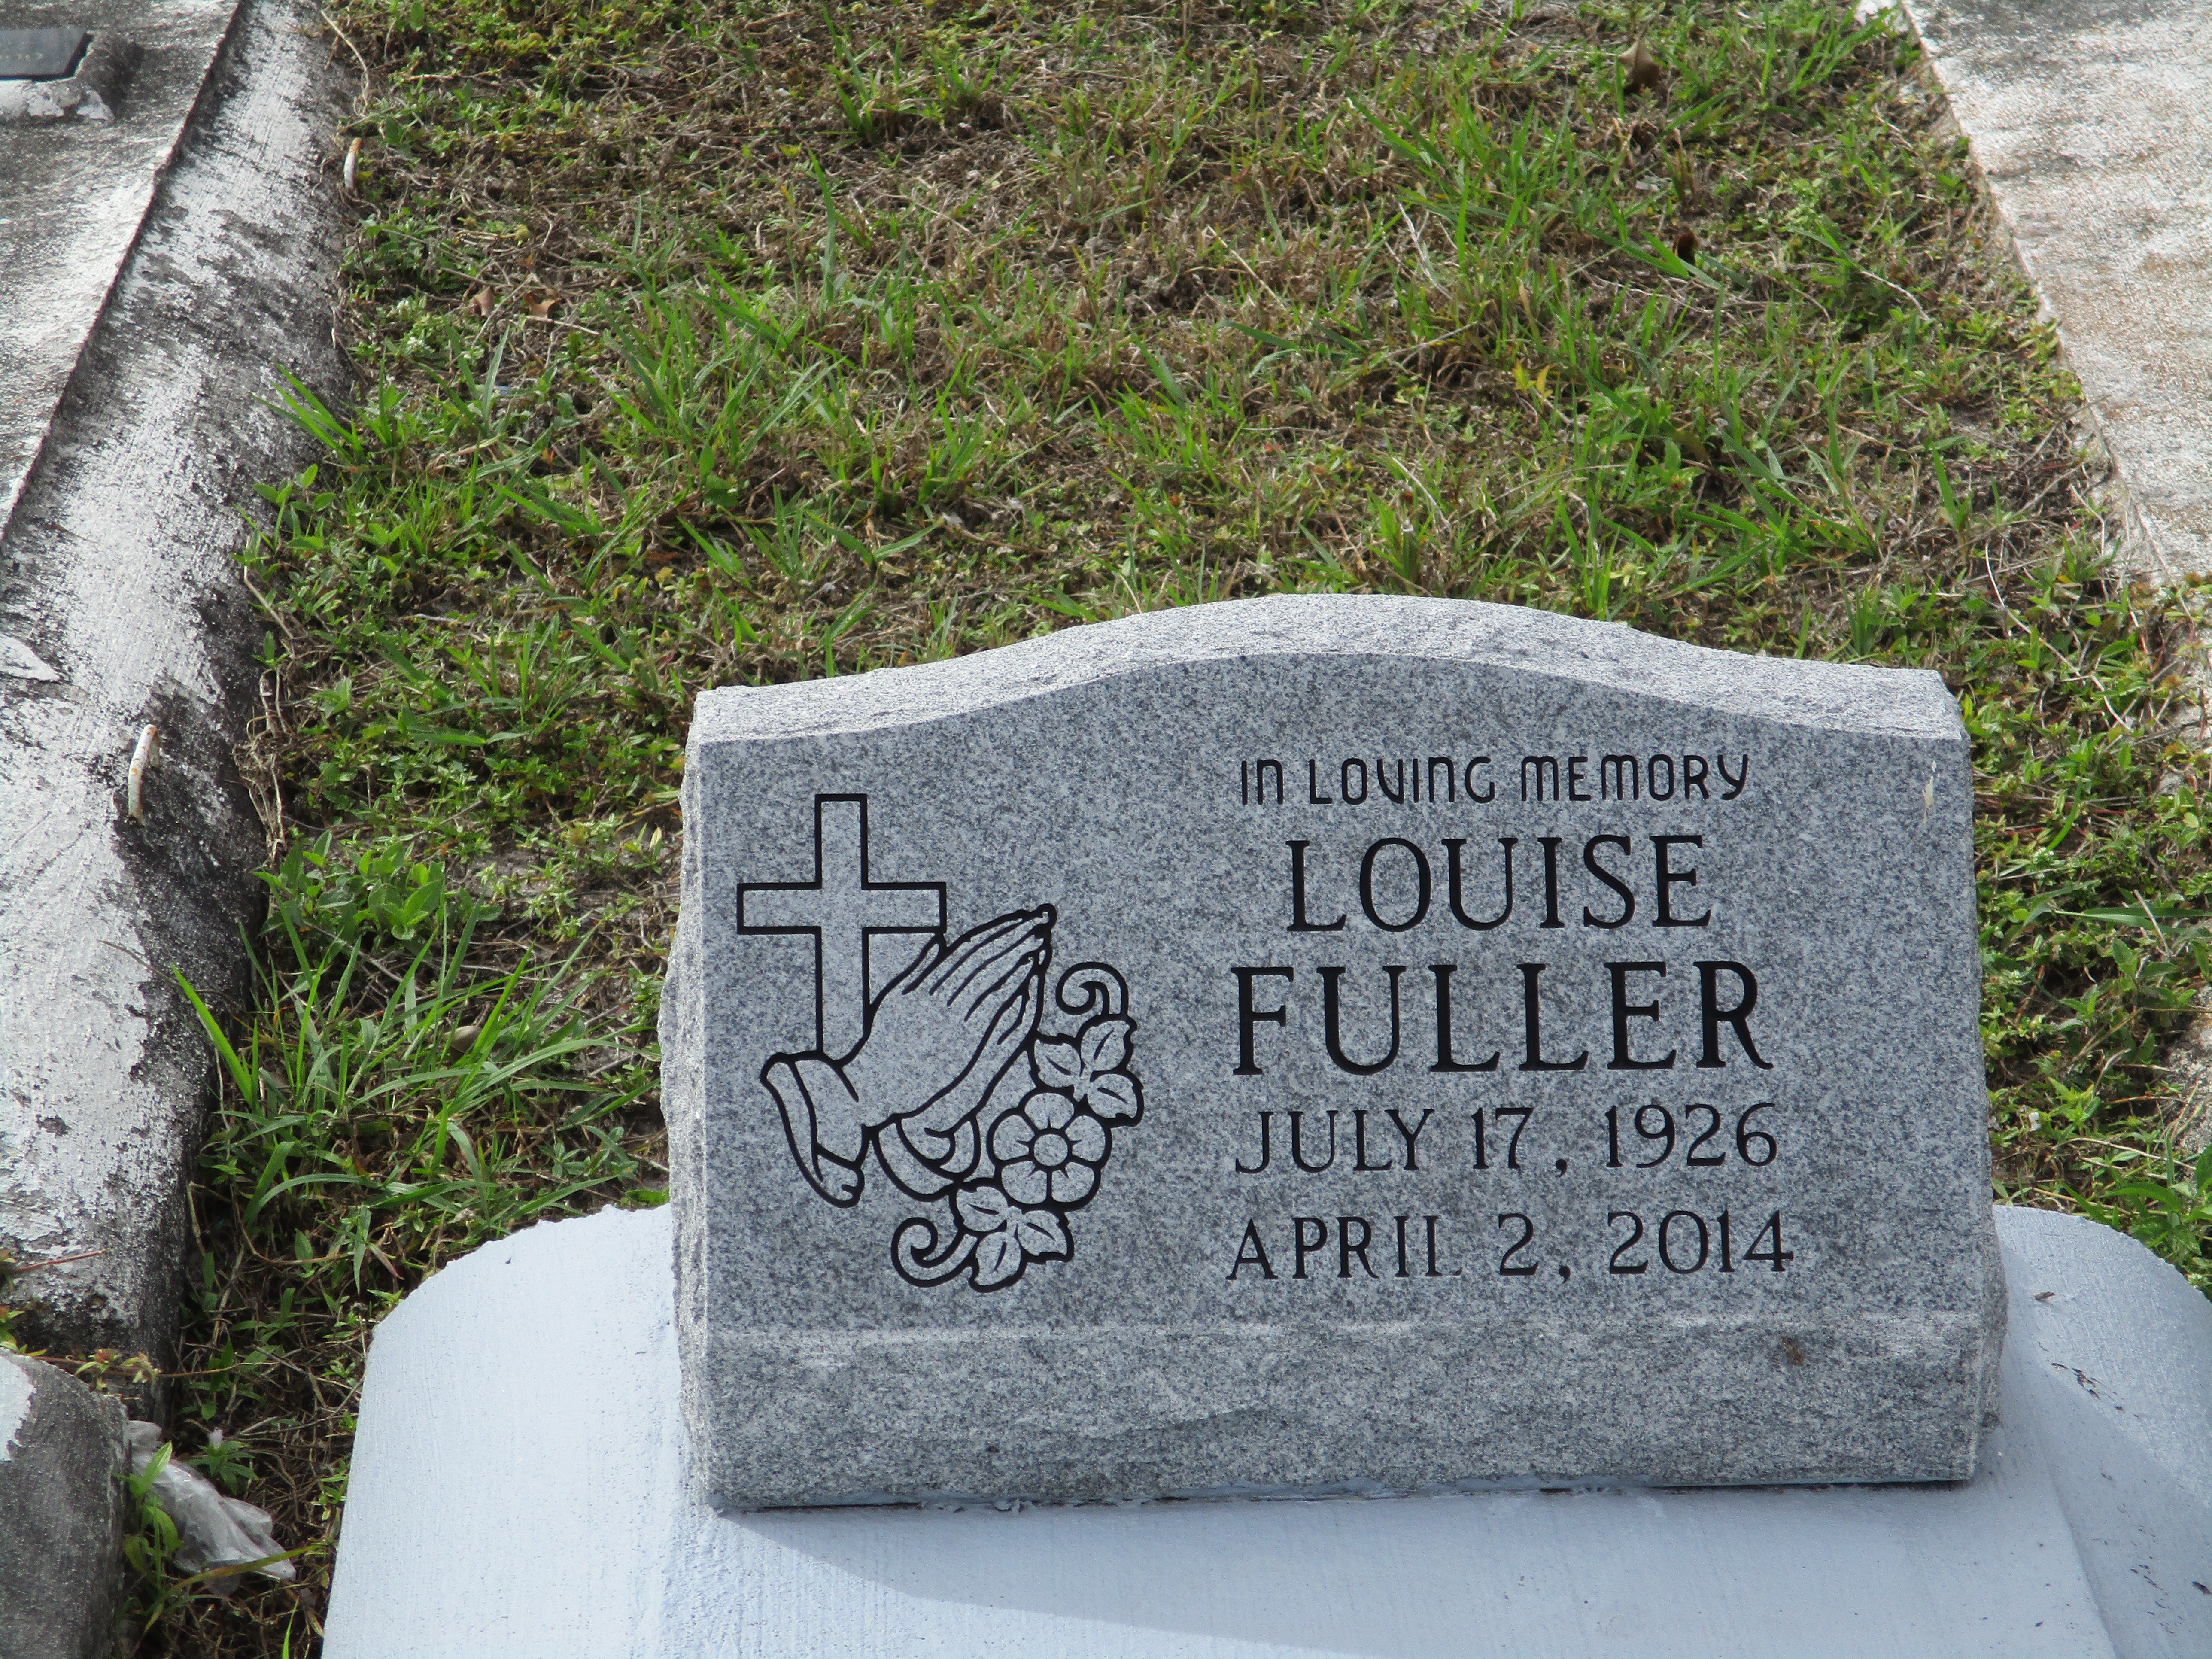 Louise Fuller